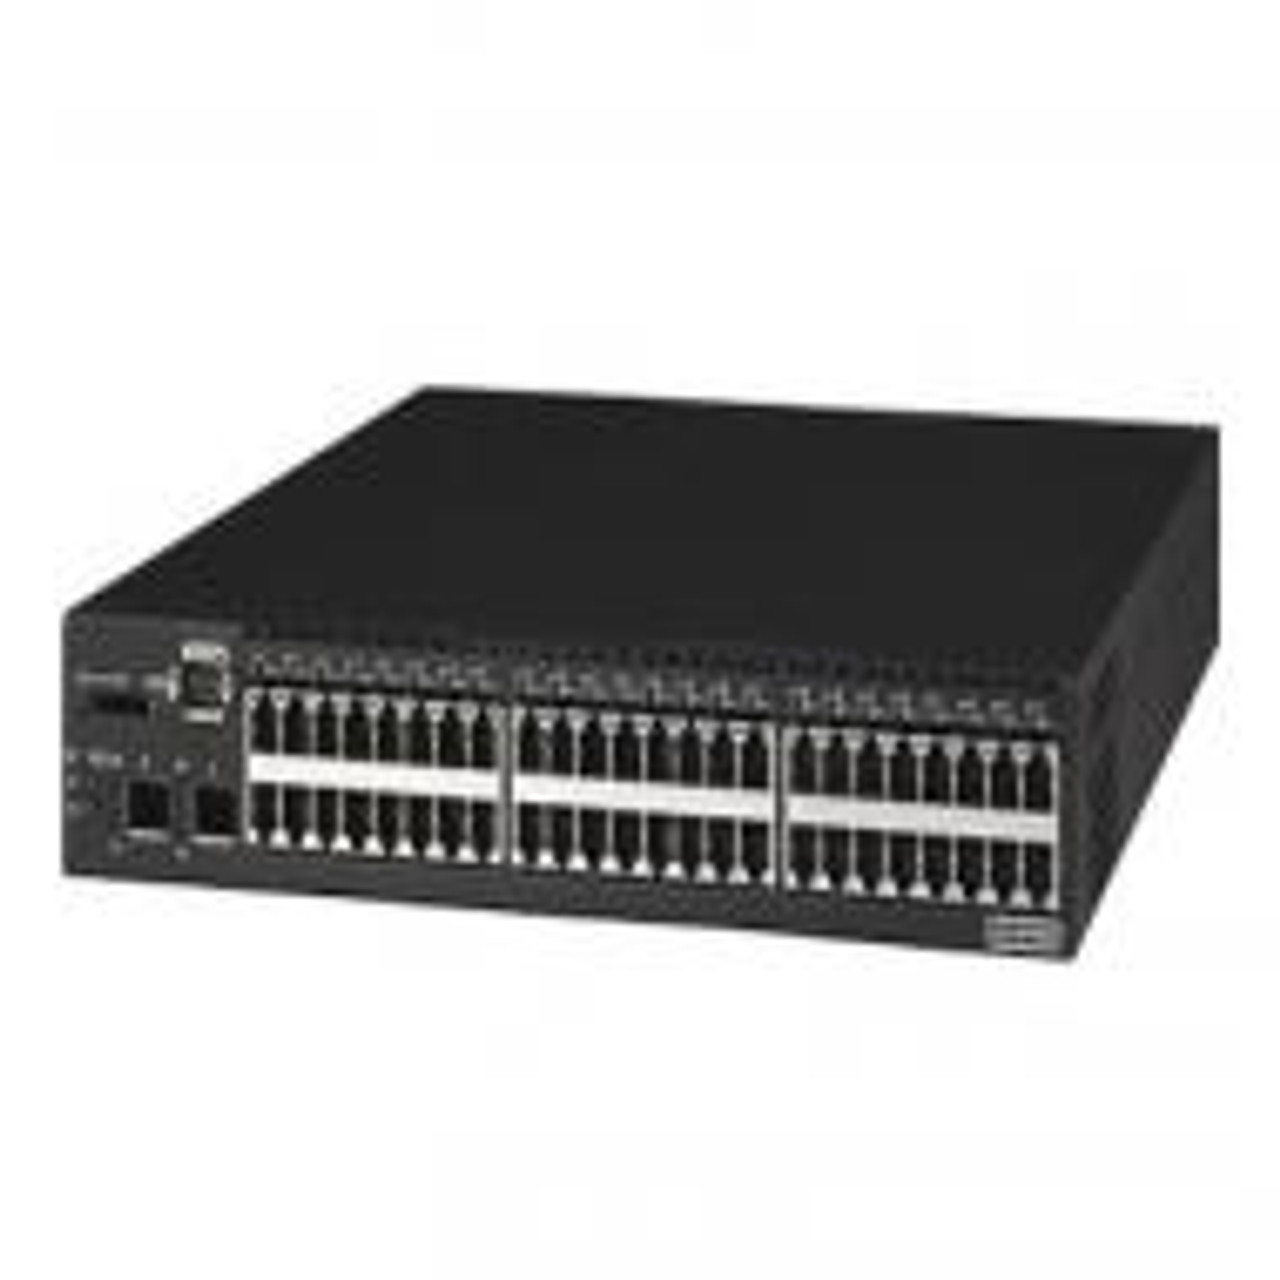 J9727-61101 | Hp | Procurve 2920-24G 24-Ports Poe+ Managed Gigabit Ethernet Switch